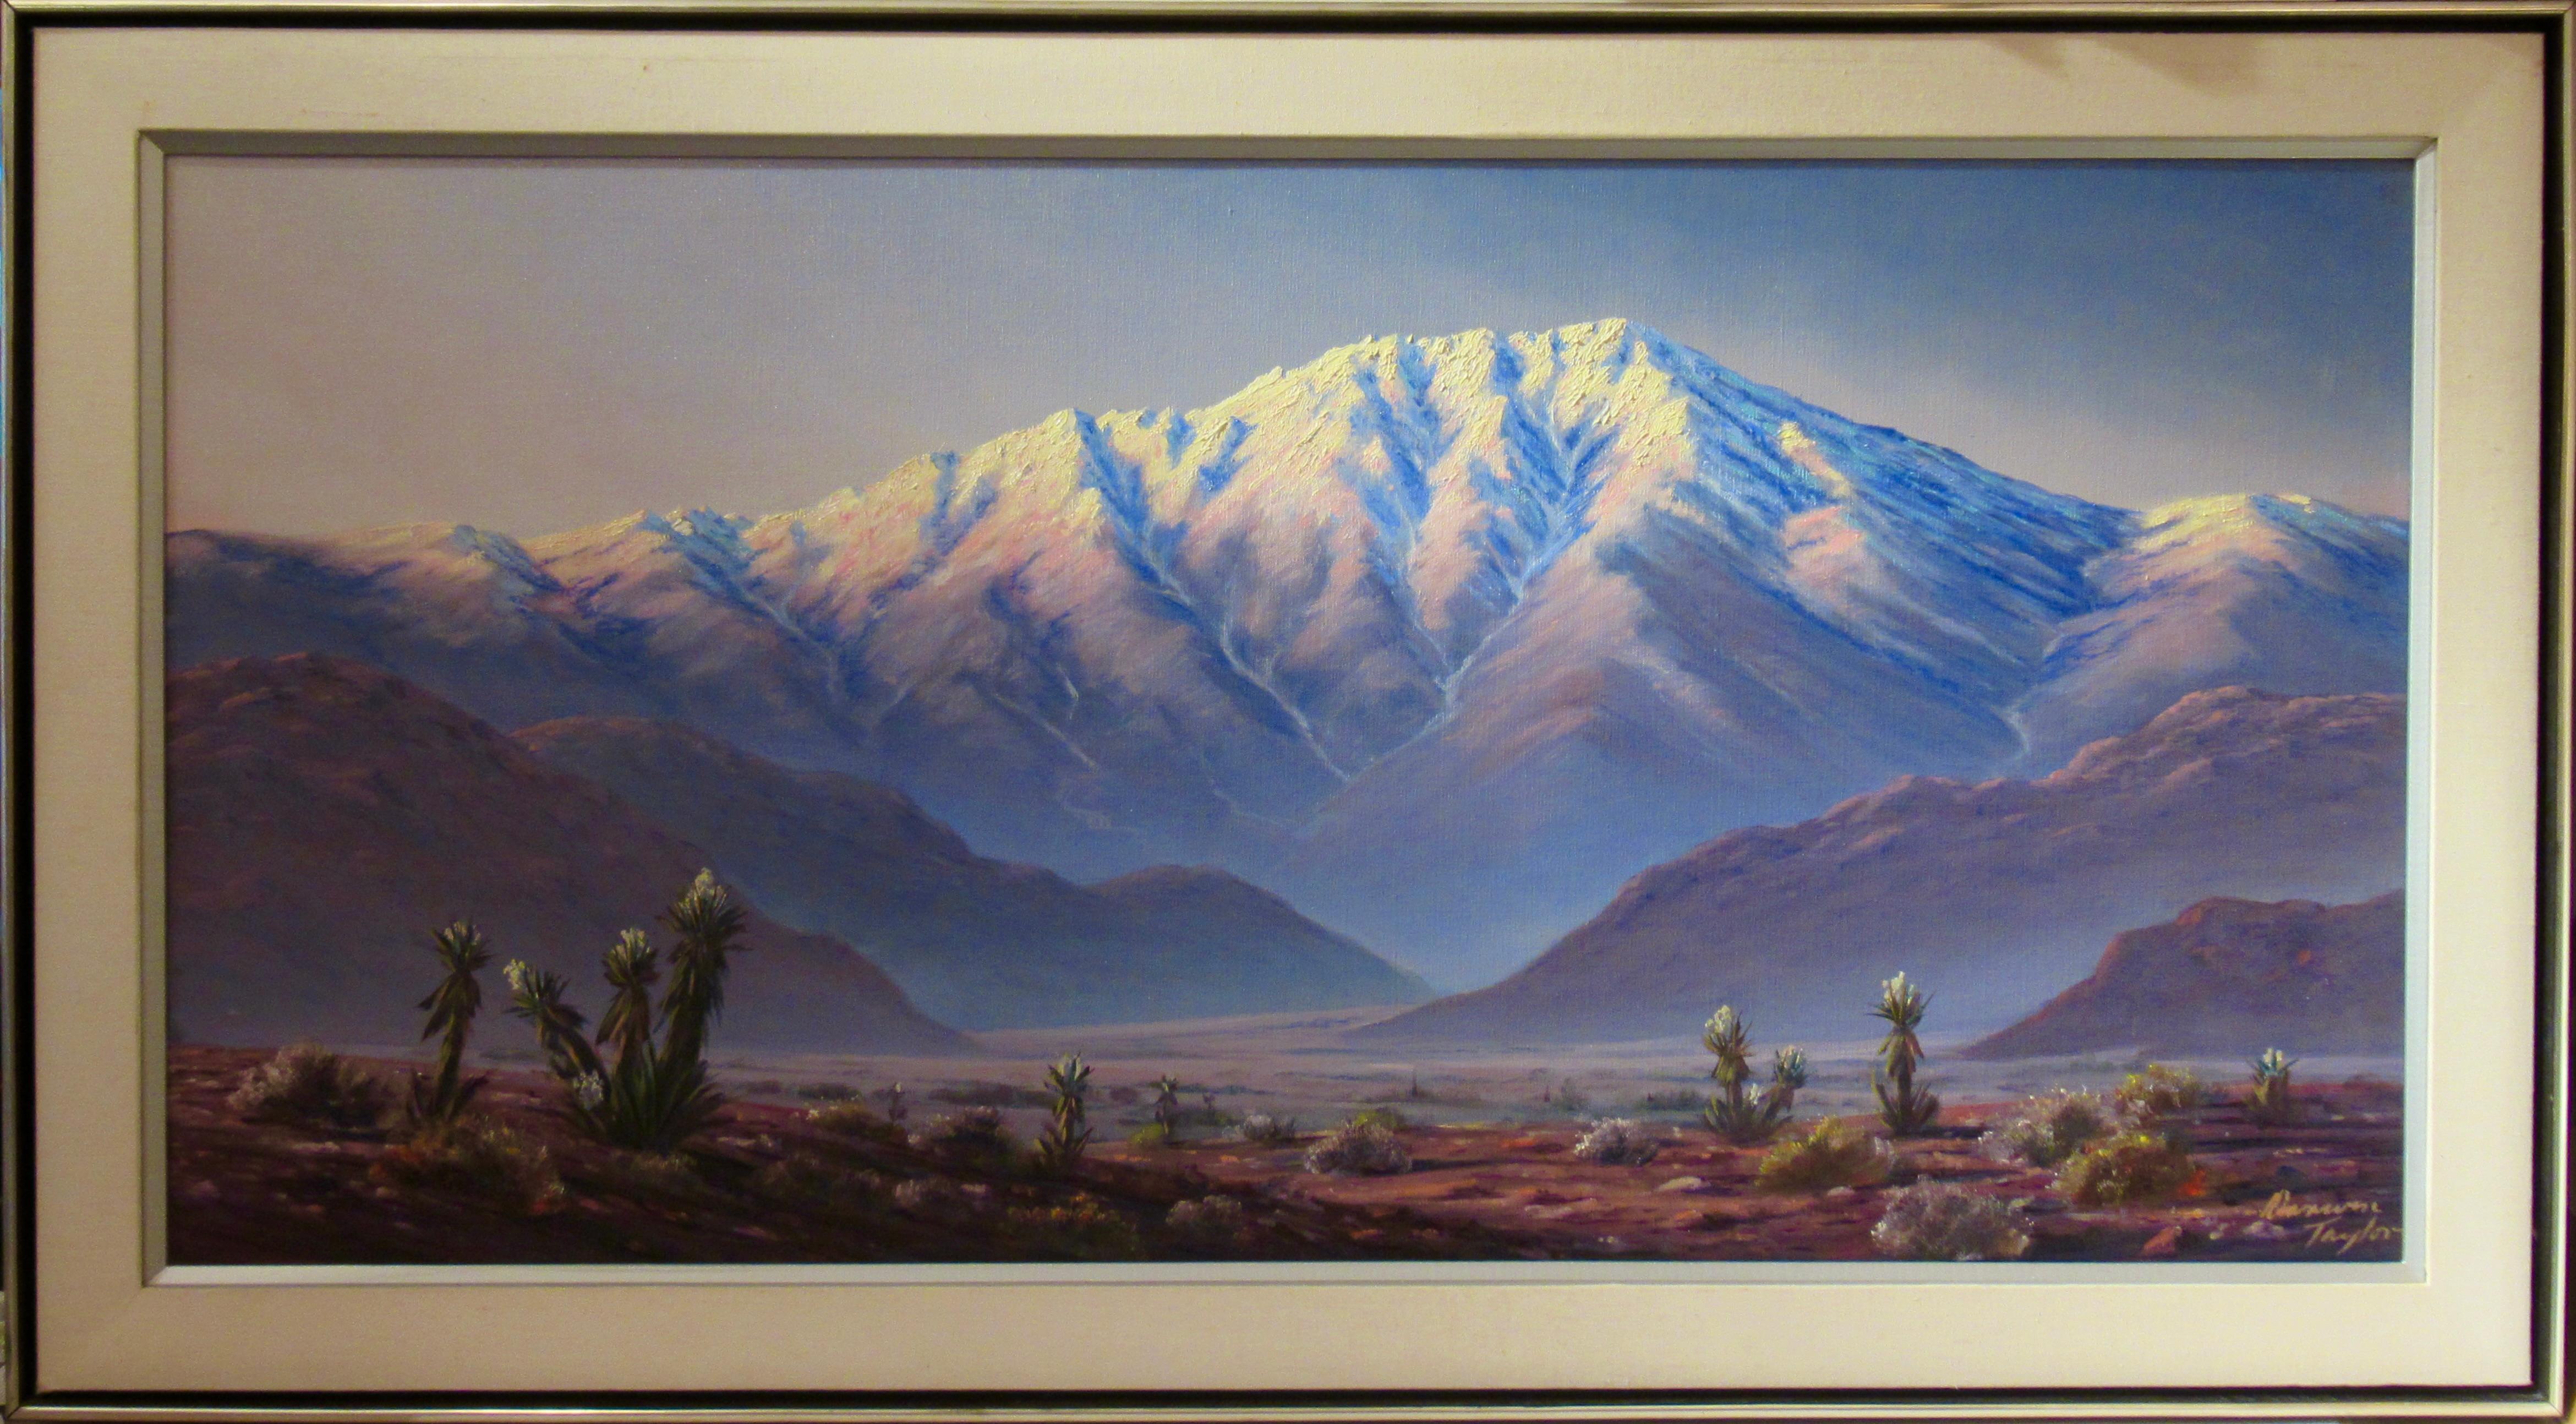 Darwin Taylor Landscape Painting - "San Jacinto Peak" Large oil painting on canvas.